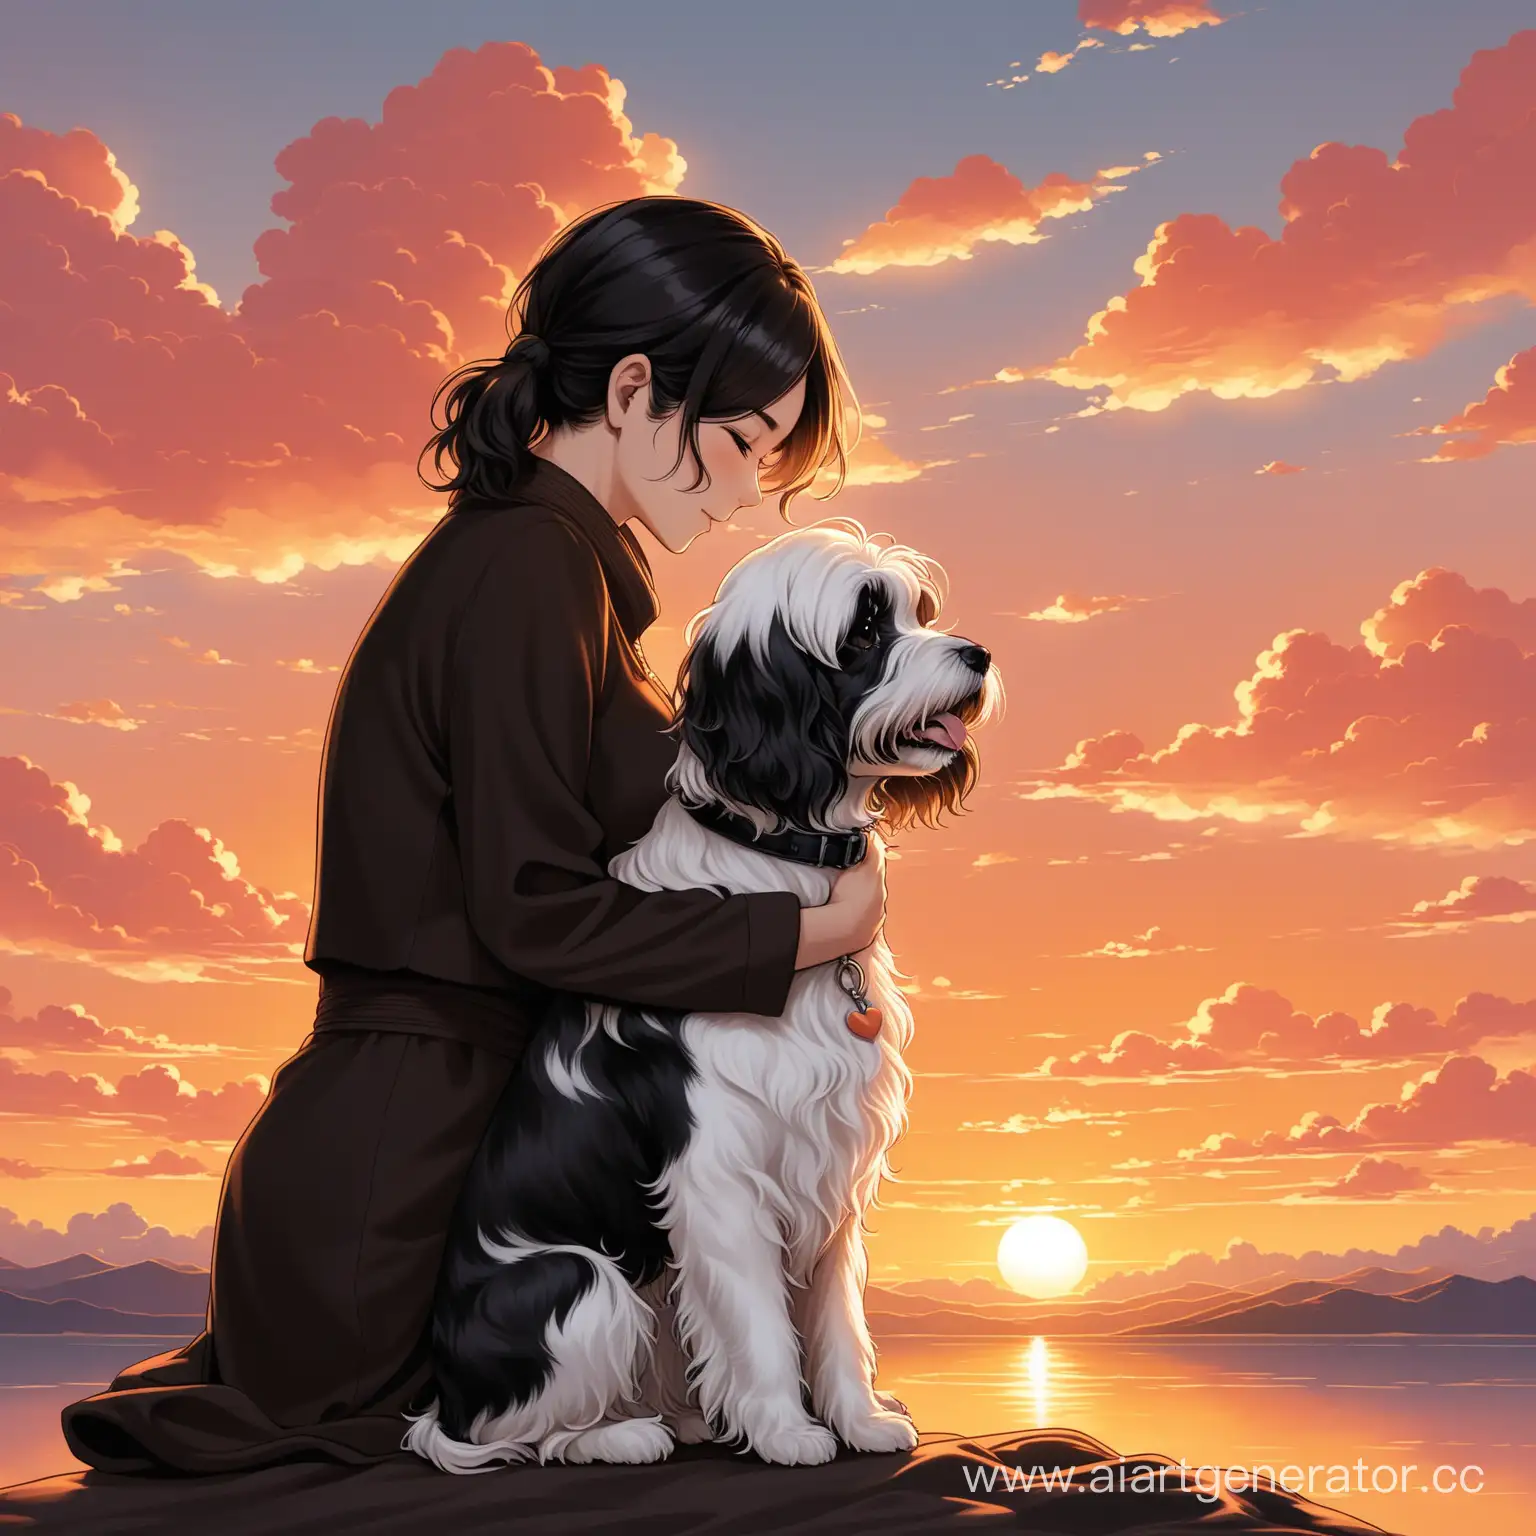 Peach-Clouds-Sunset-with-Tibetan-Terrier-Beautiful-Bond-between-Human-and-Dog